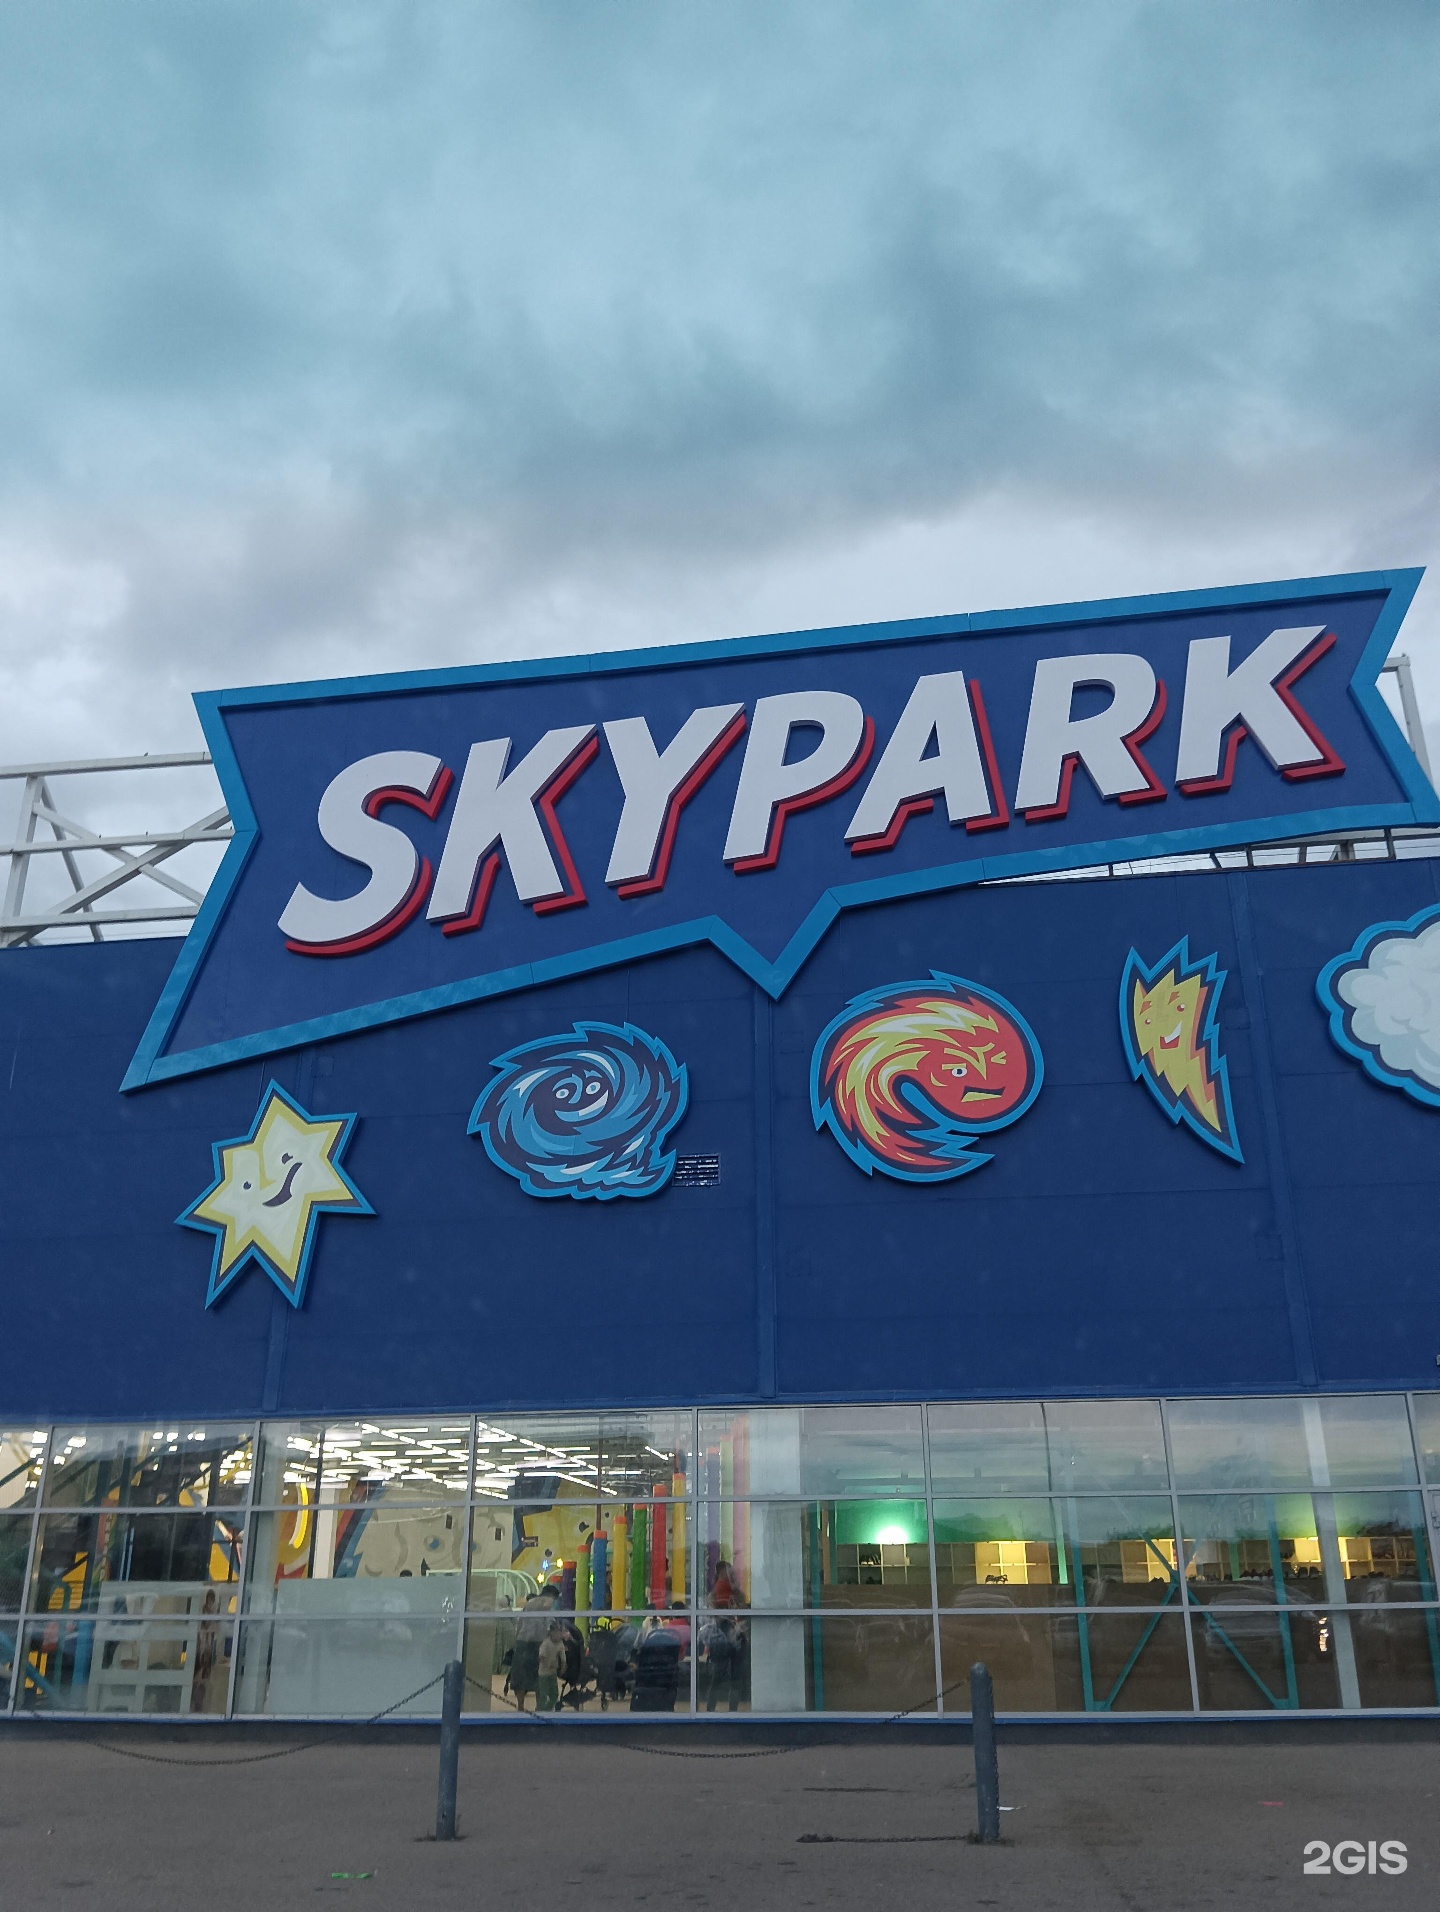 Amusement and entertainment park "Skypark"